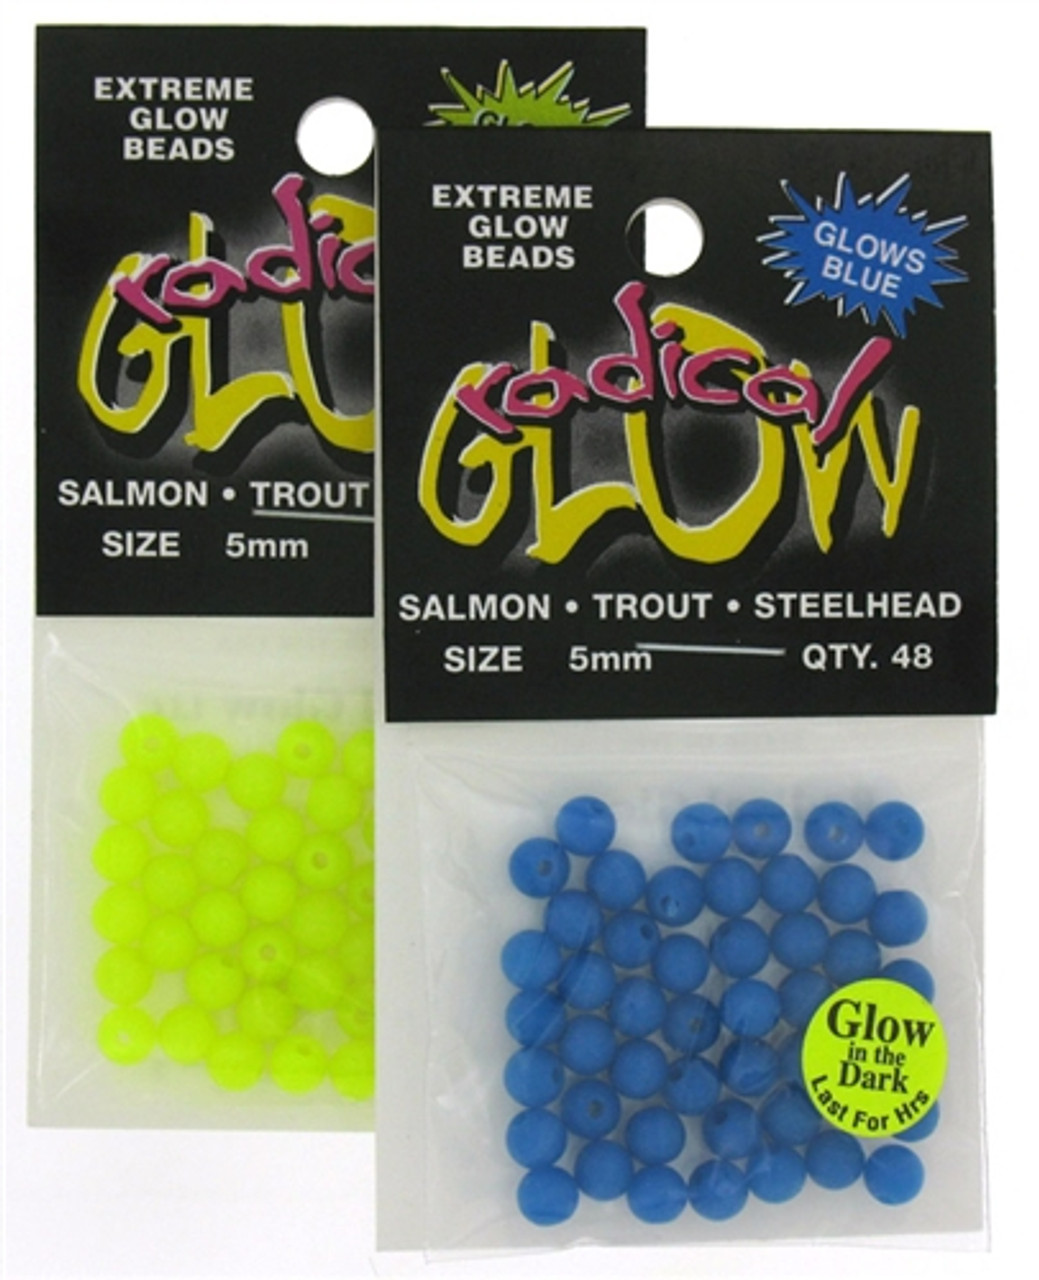 Radical Glow Extreme Glow Beads